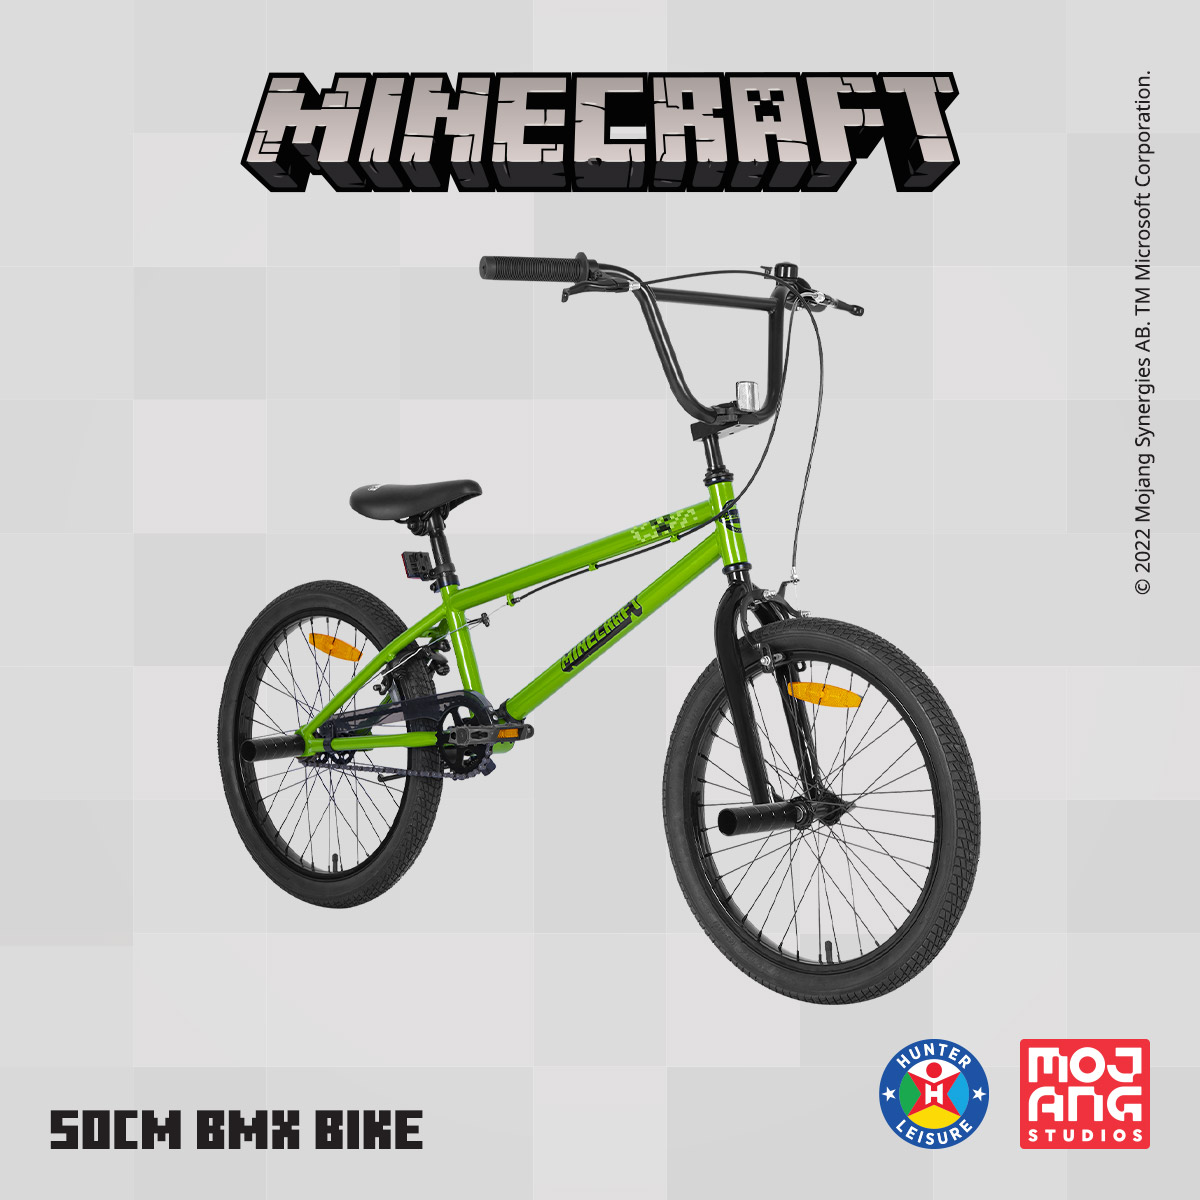 www.hunterleisure.com.au Minecraft 50cm BMX Bike Big W Hunter Leisure